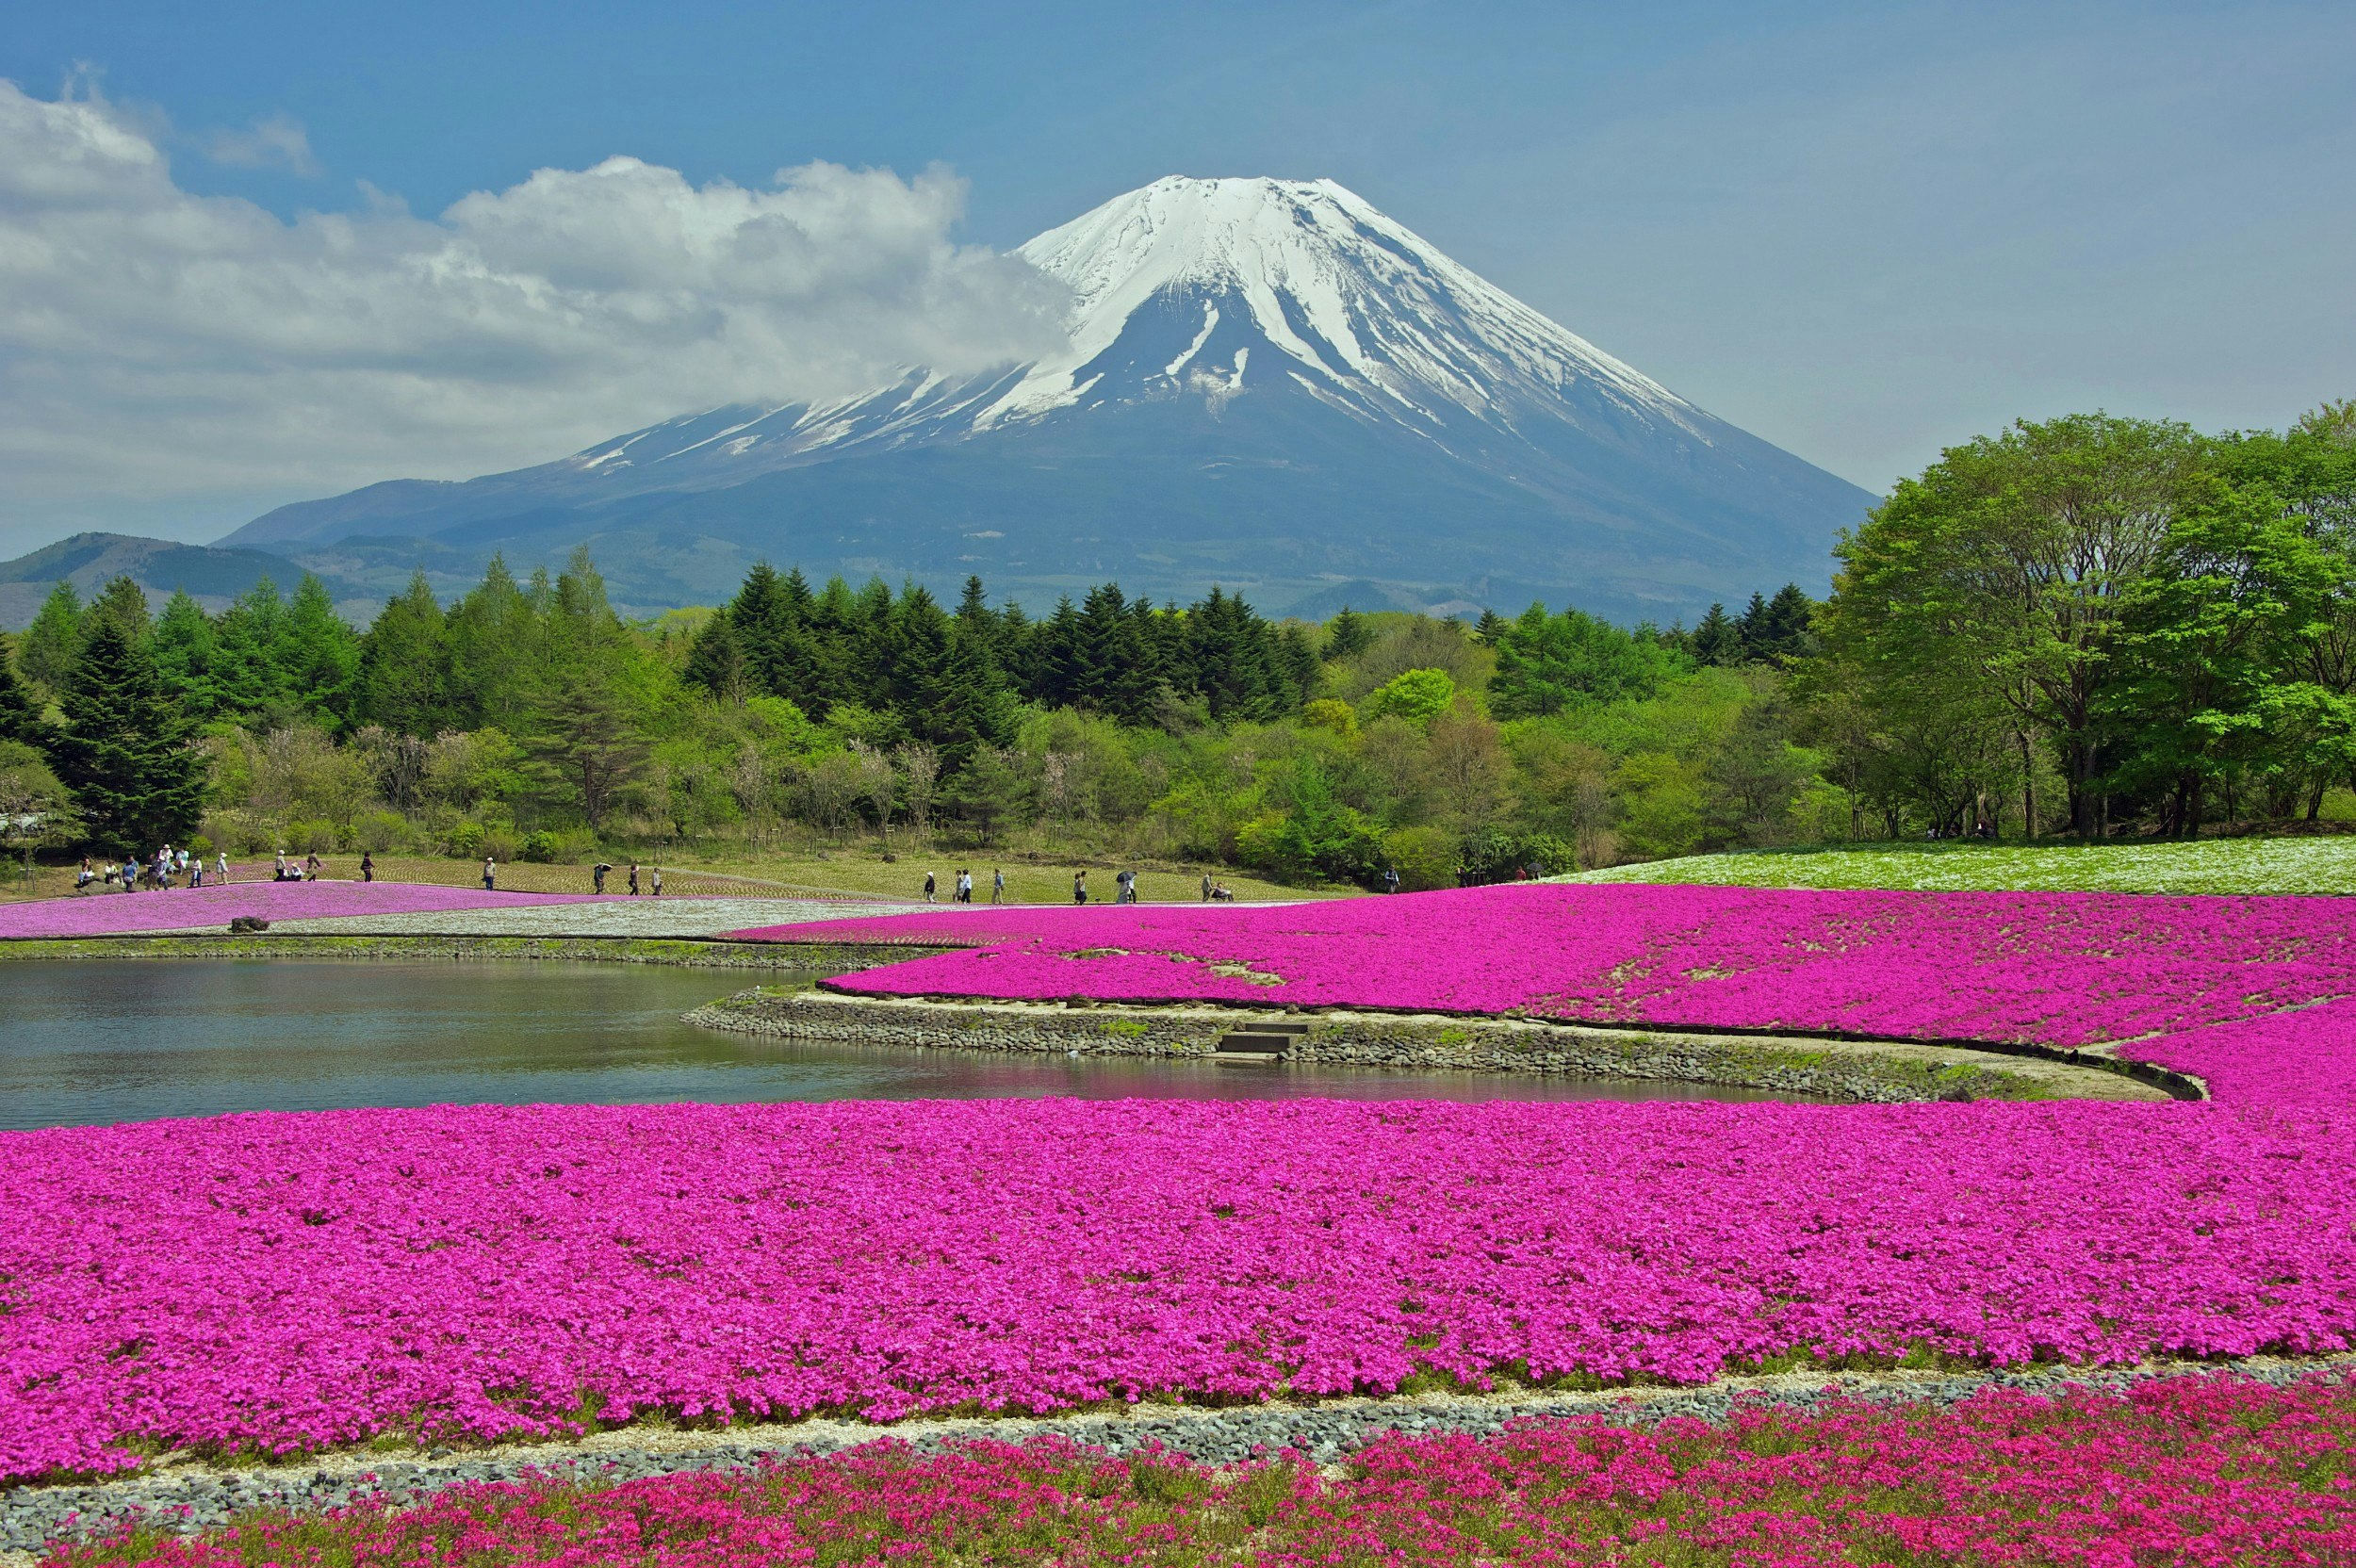 Phlox subalata wildflowers with Mount Fuji in the background